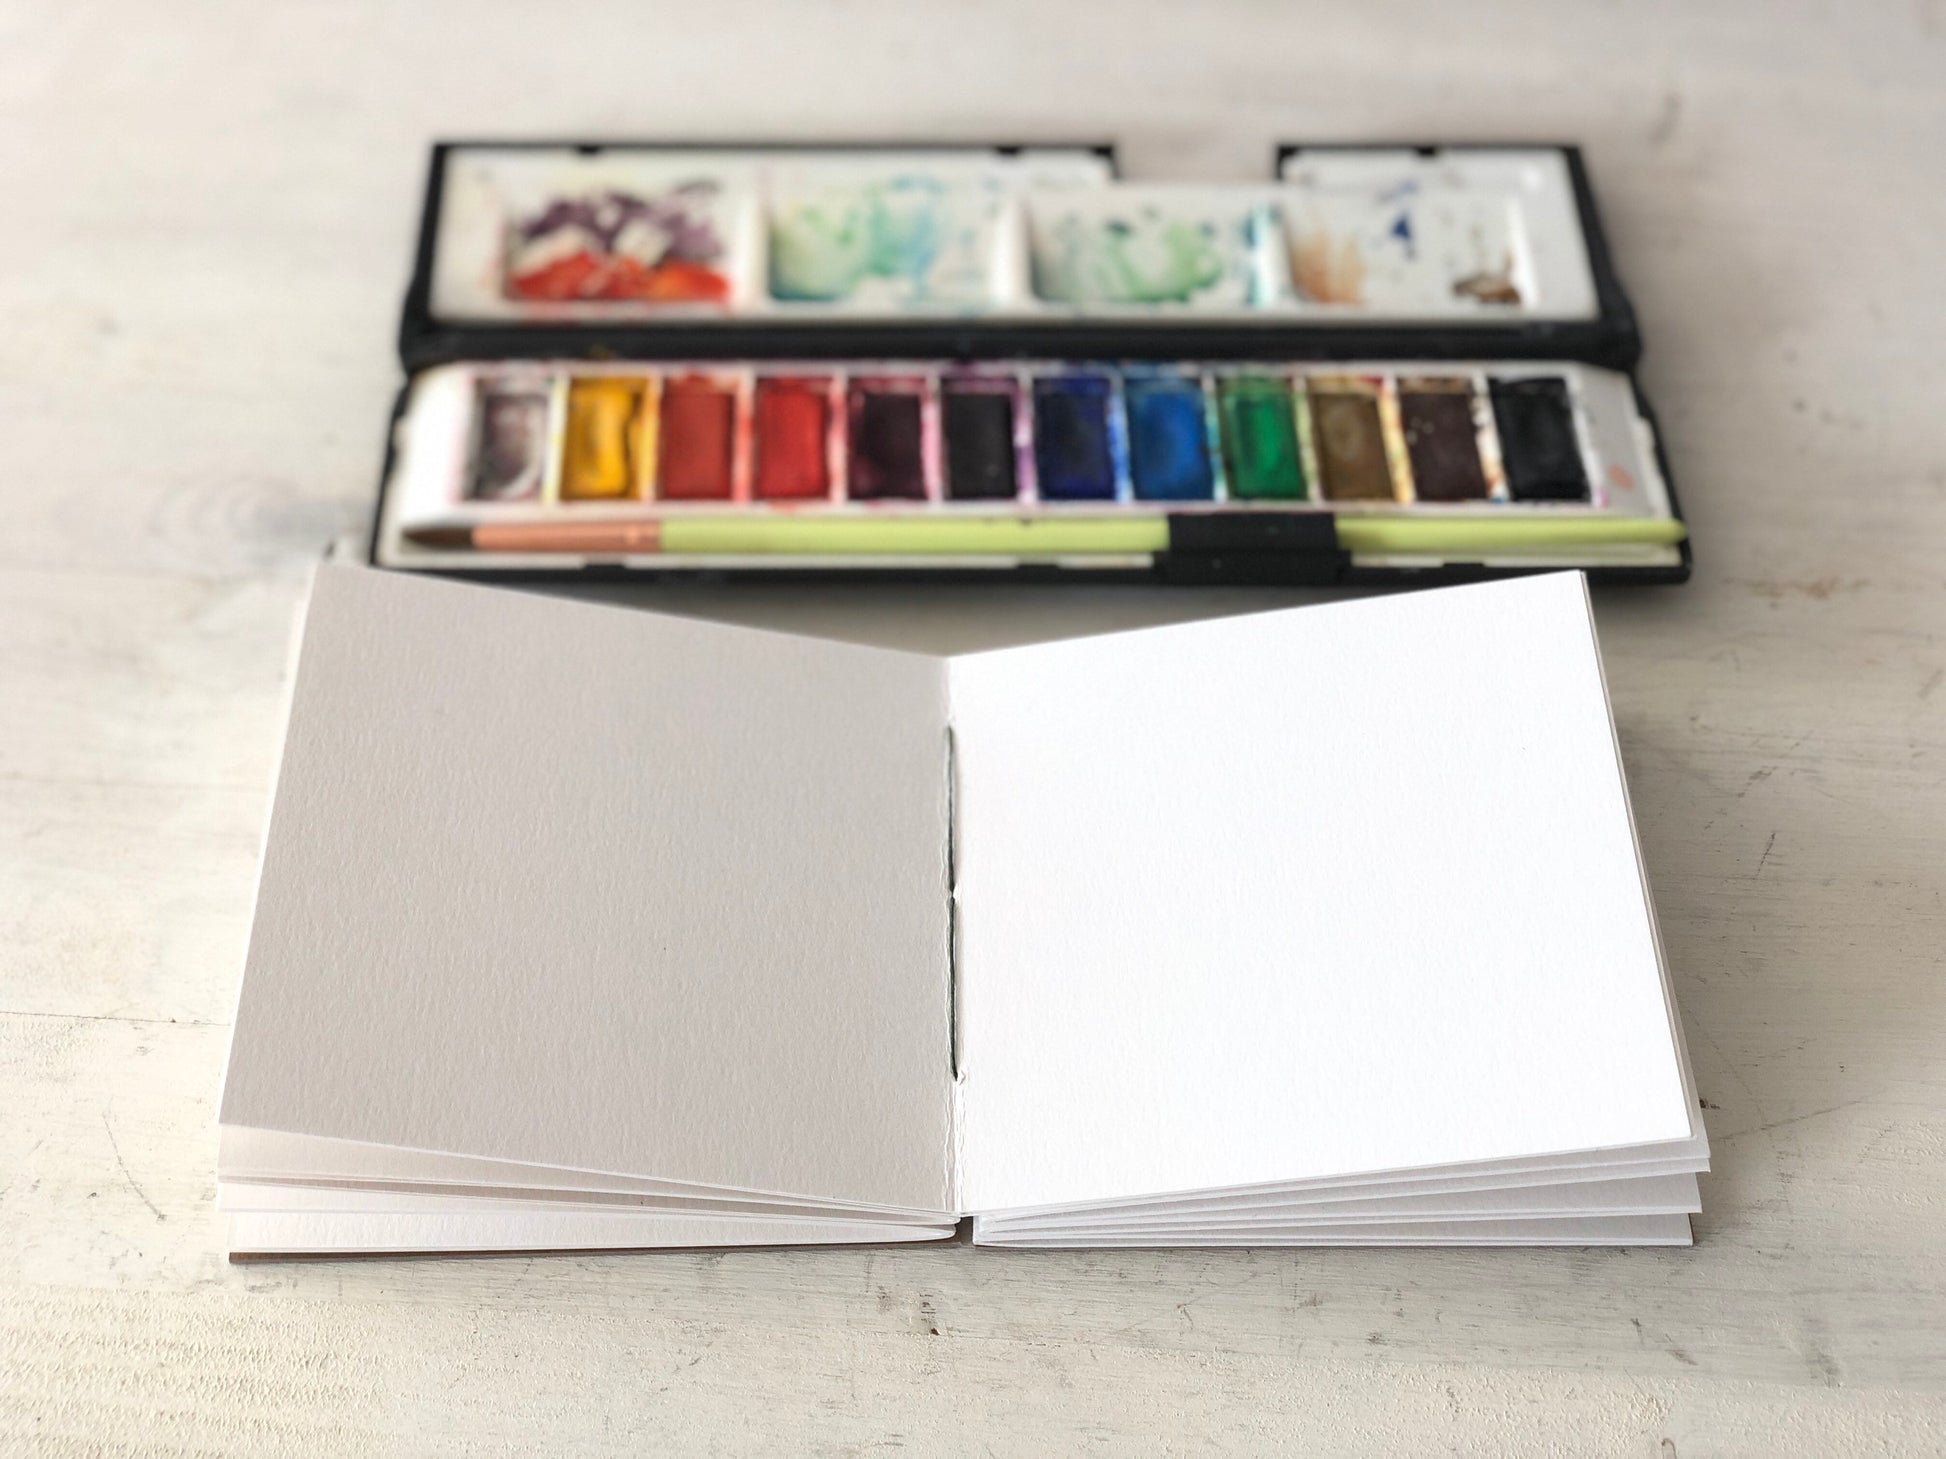 Moleskine - Coloring Kit w/ Sketchbook and Watercolor Pencils